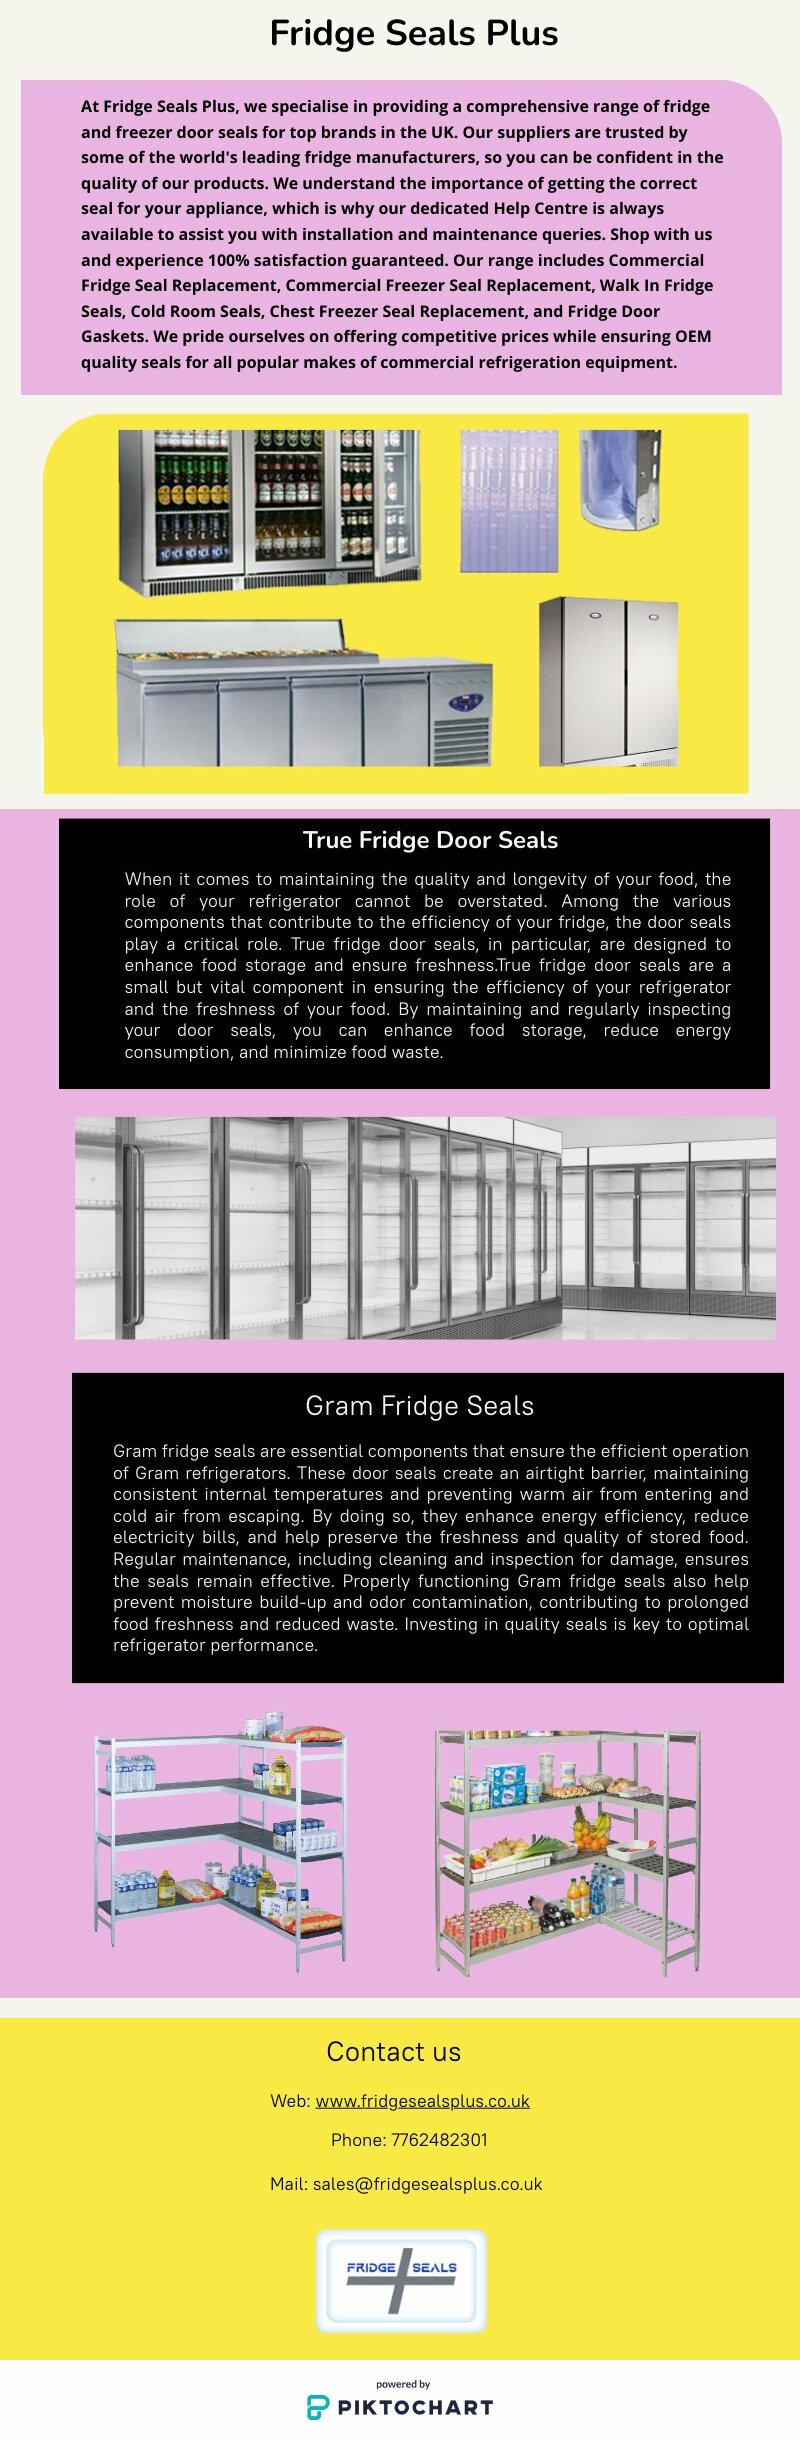 Enhance Food Storage, Freshness with True Fridge Door Seals | Piktochart Visual Editor